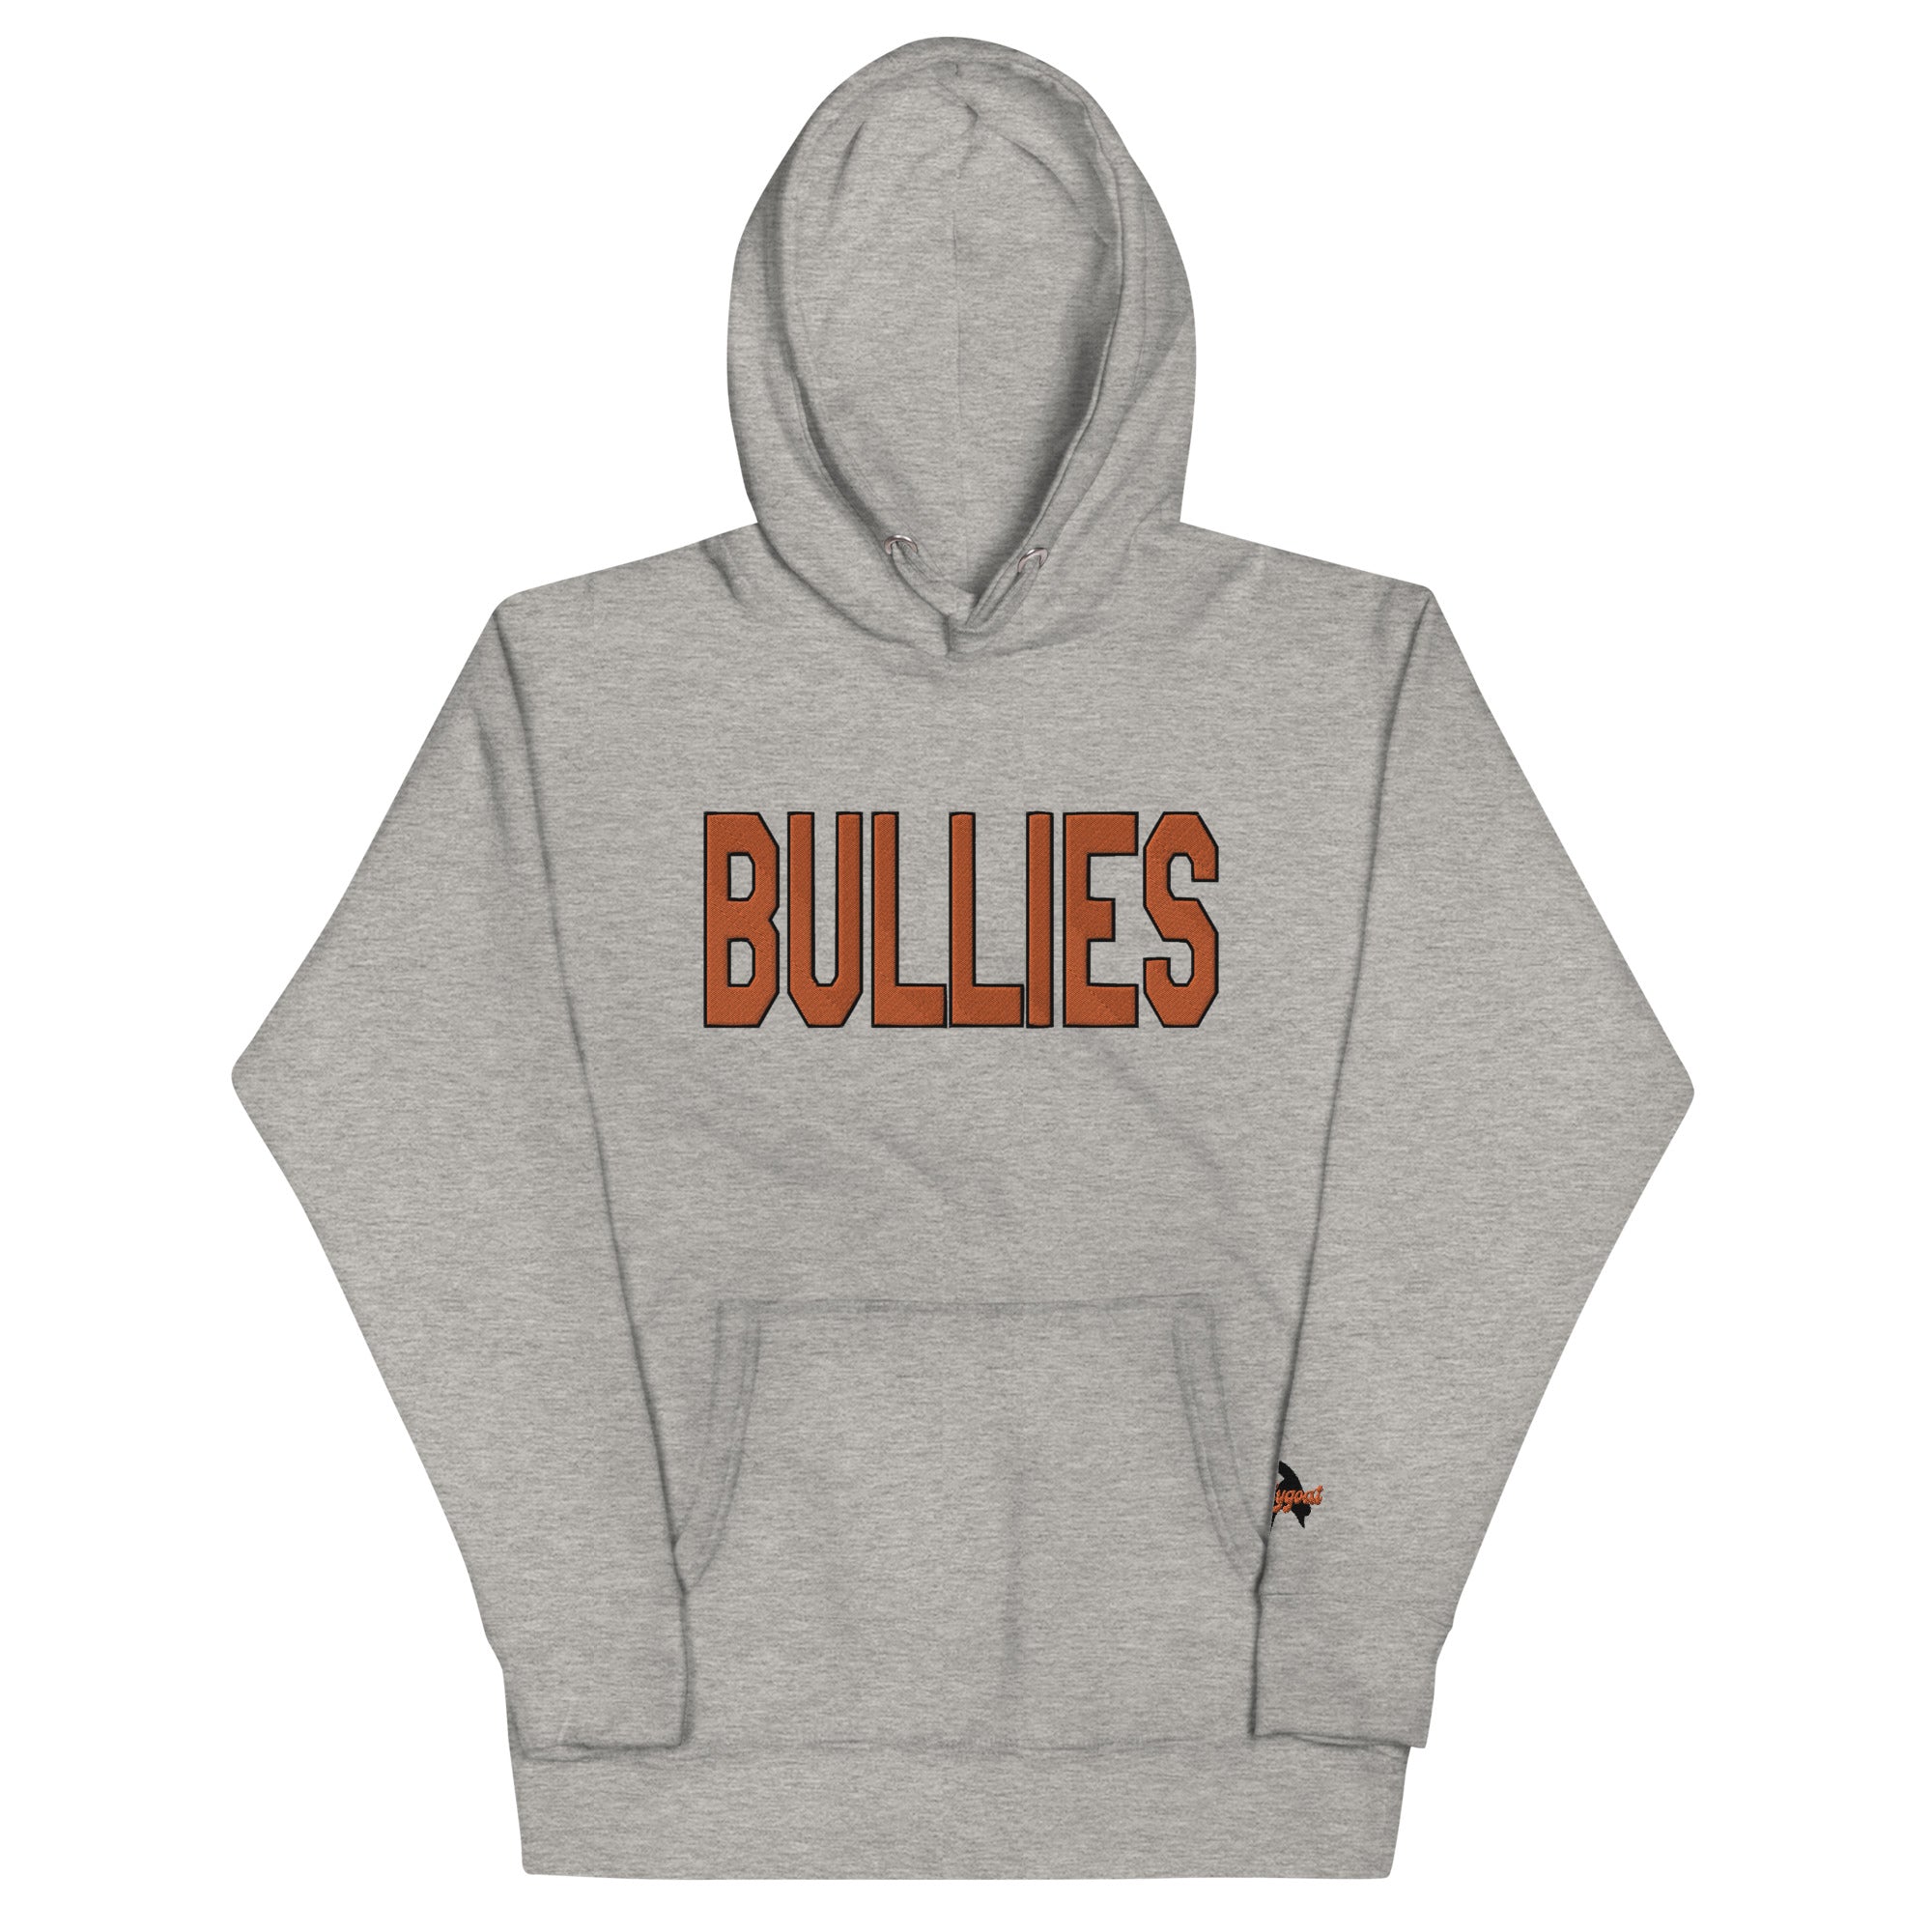 "Bullies" Embroidered Hoodie